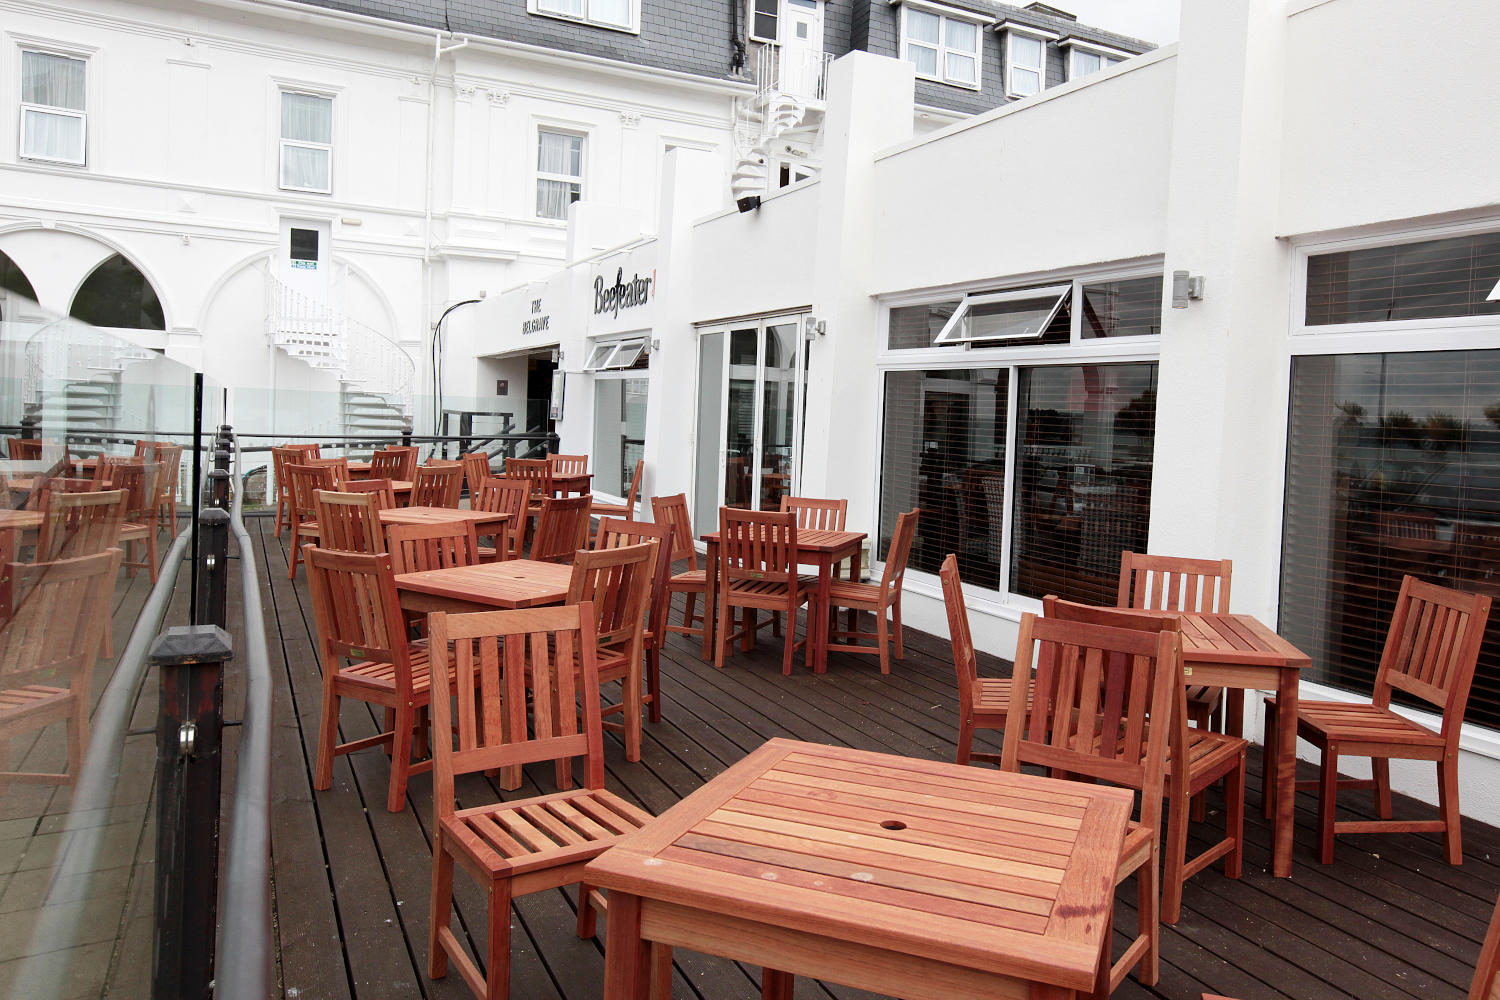 Beefeater restaurant exterior Premier Inn Torquay Seafront hotel Torquay 03333 219097